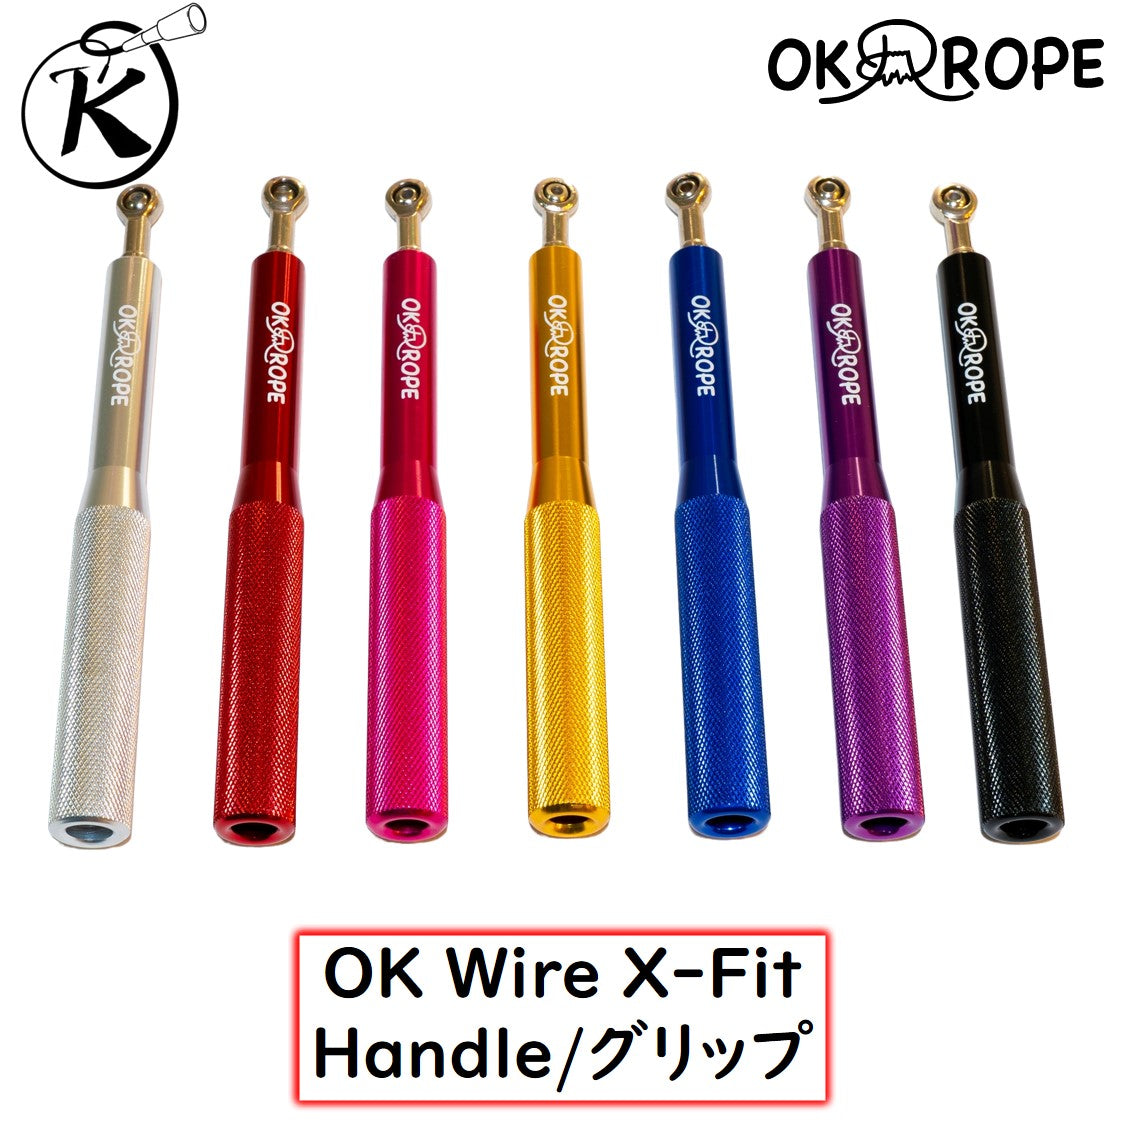 OK Wire X-Fit スピードワイヤーロープ グリップのみ 1本